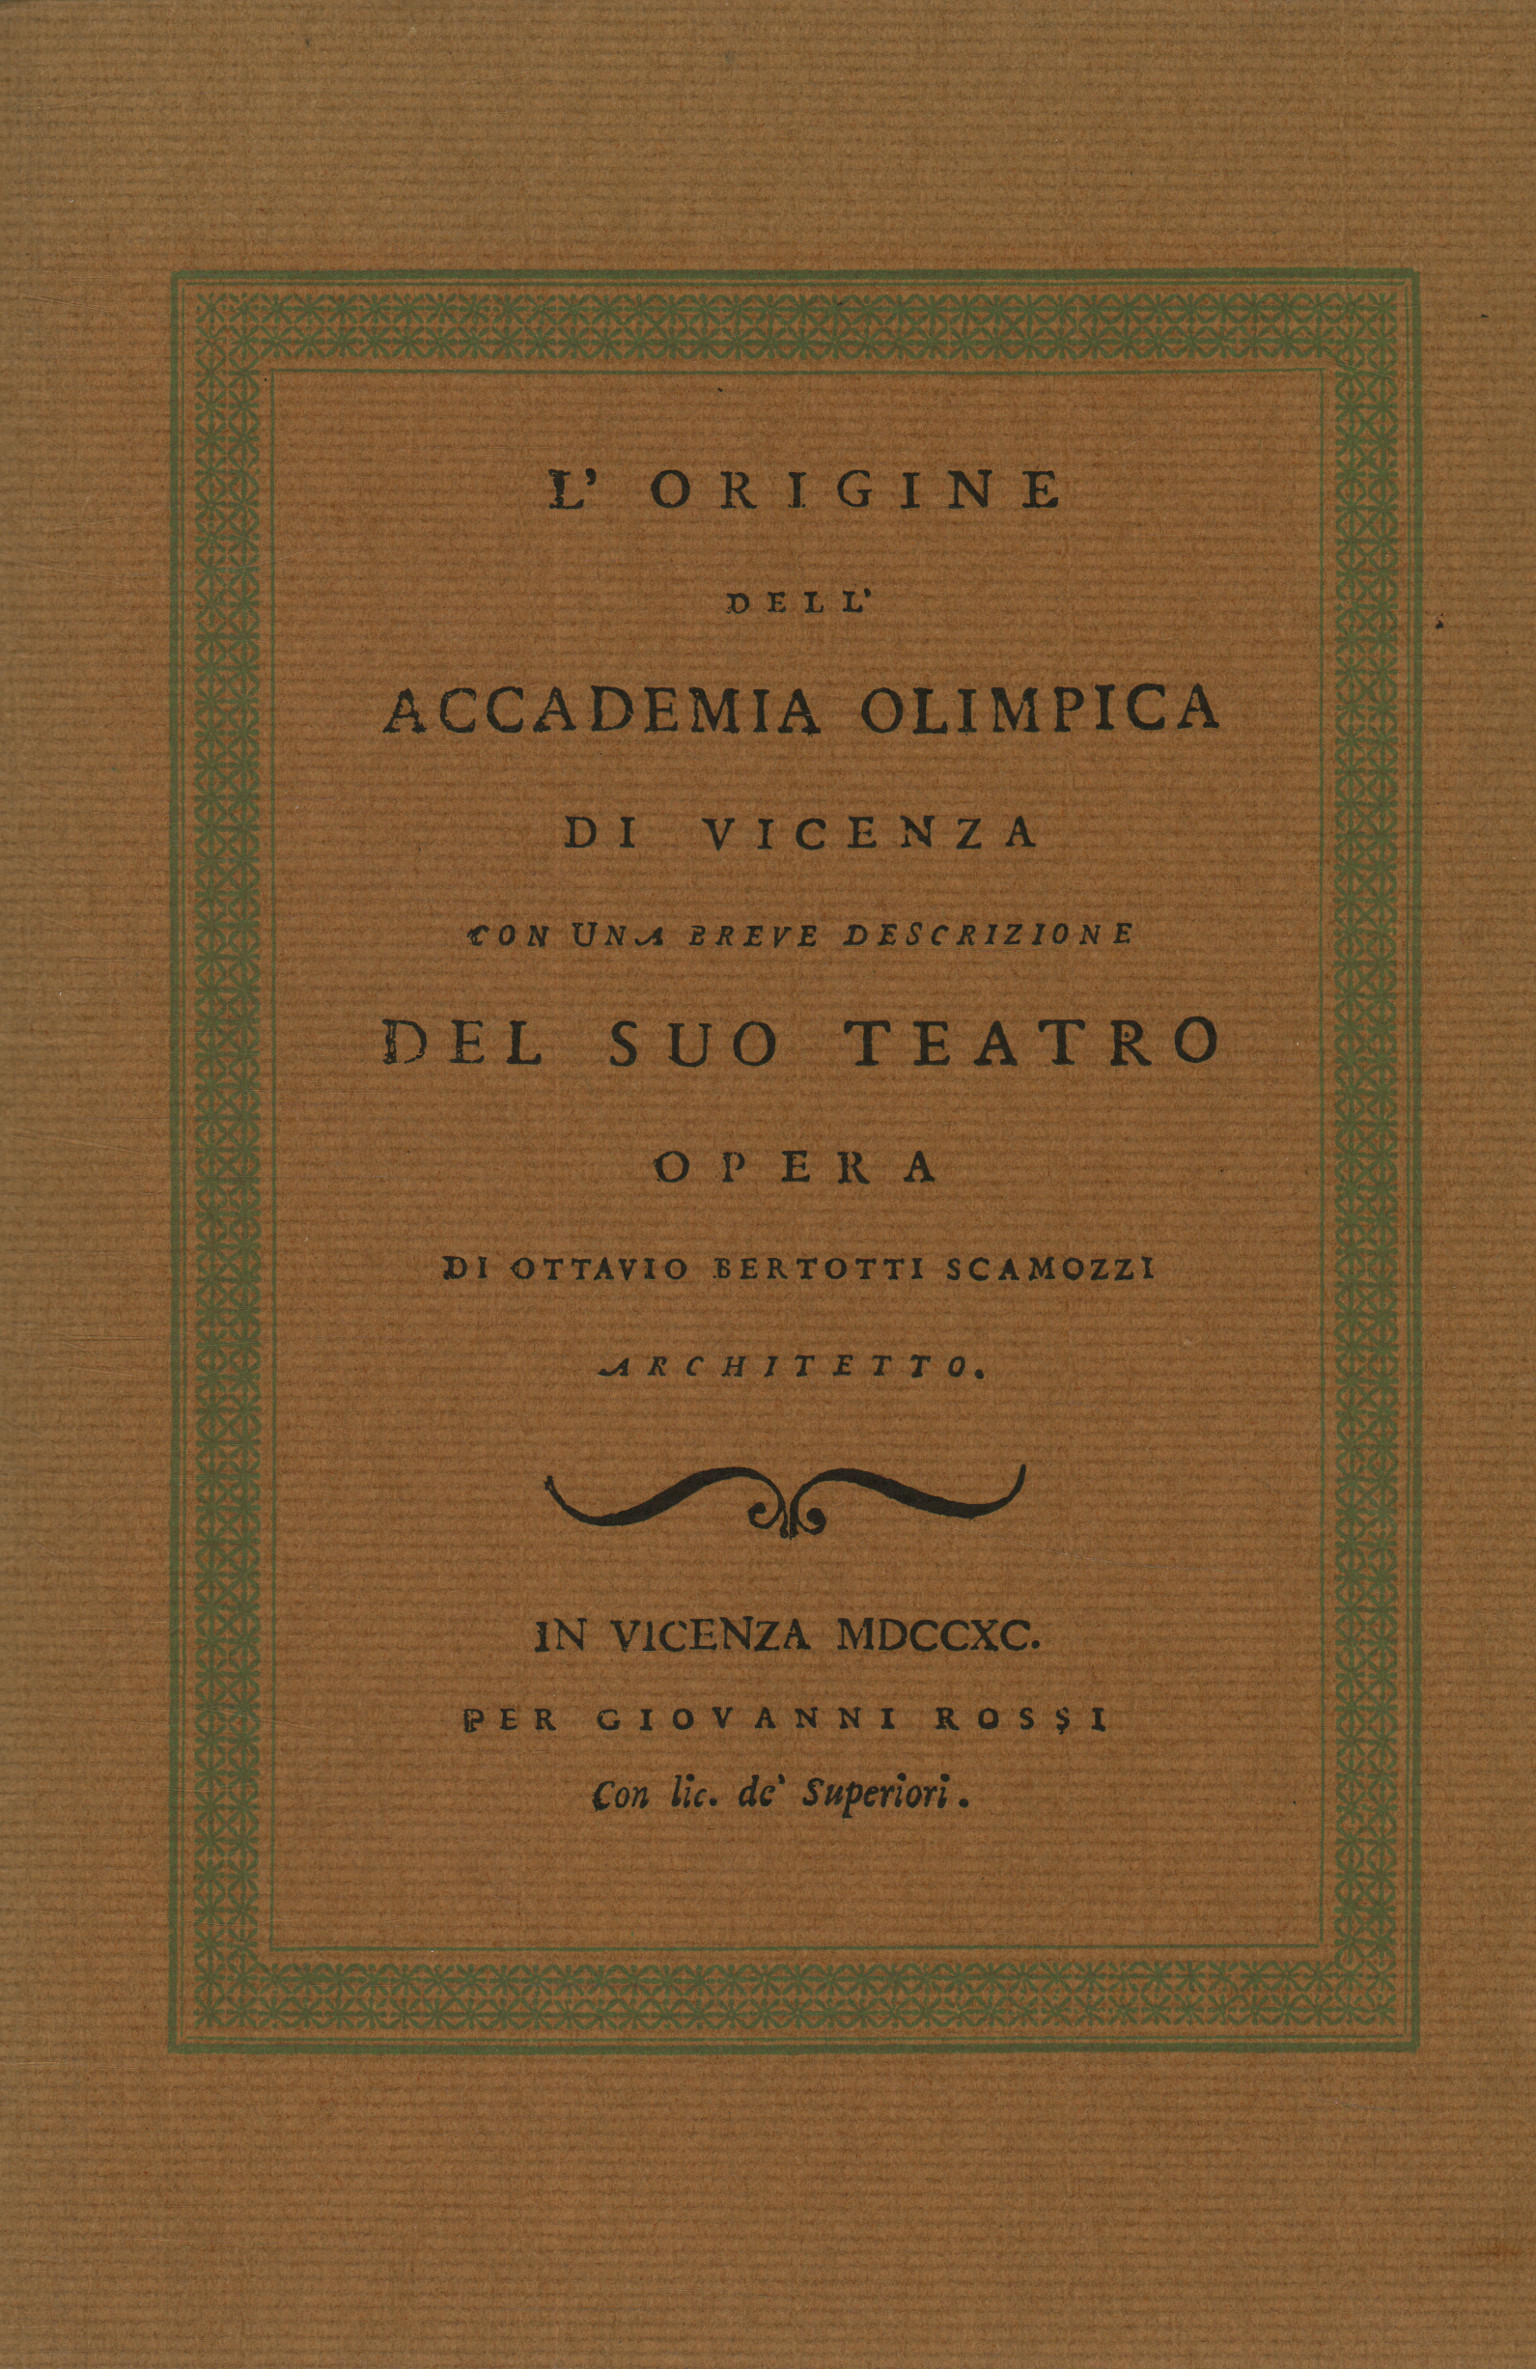 The origin of the Vicenza Olympic Academy with Ottavio Bertotti Scamozzi